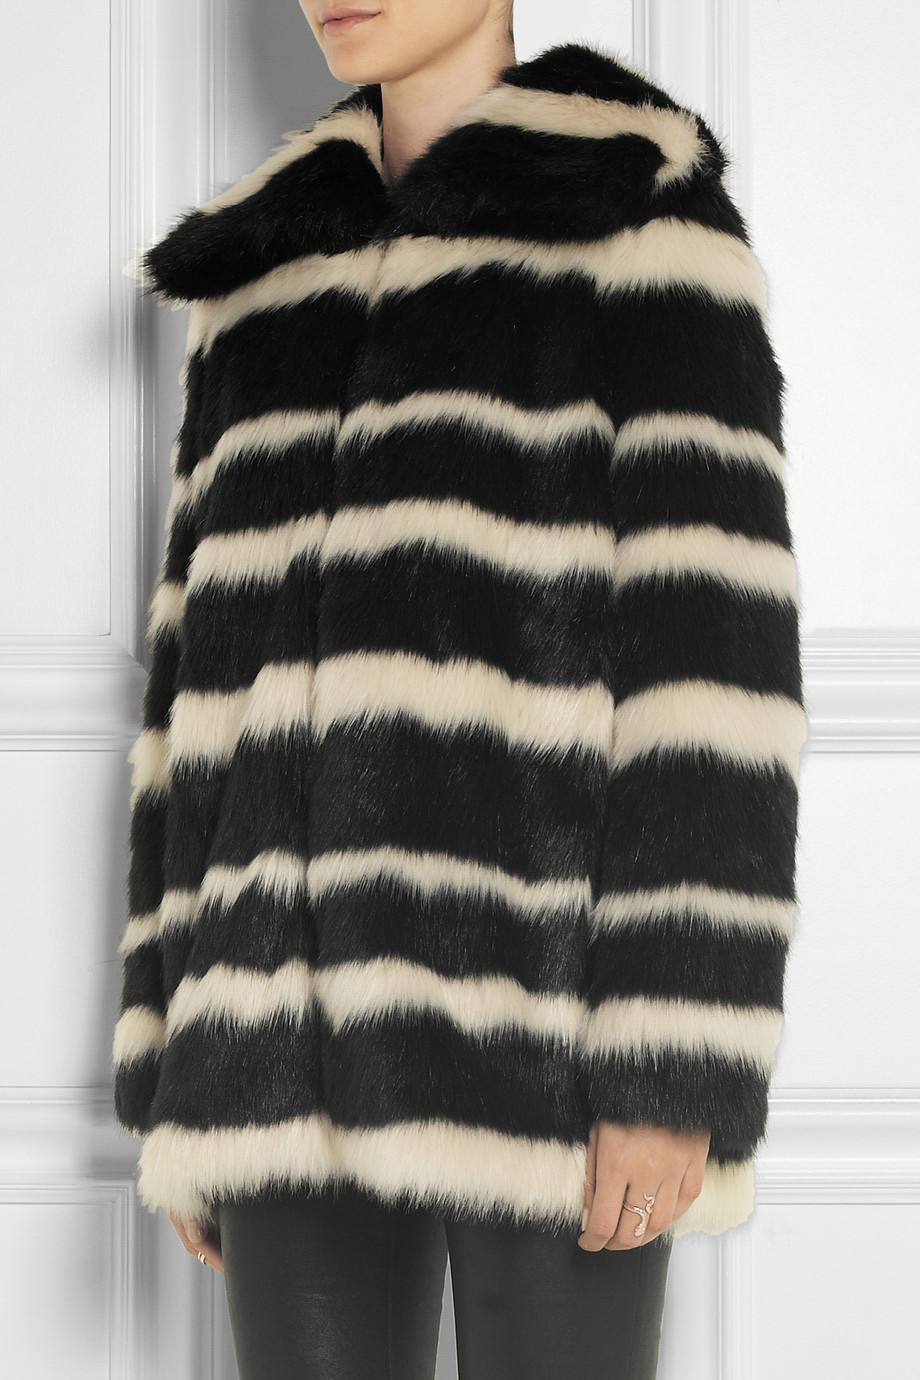 Black striped coat